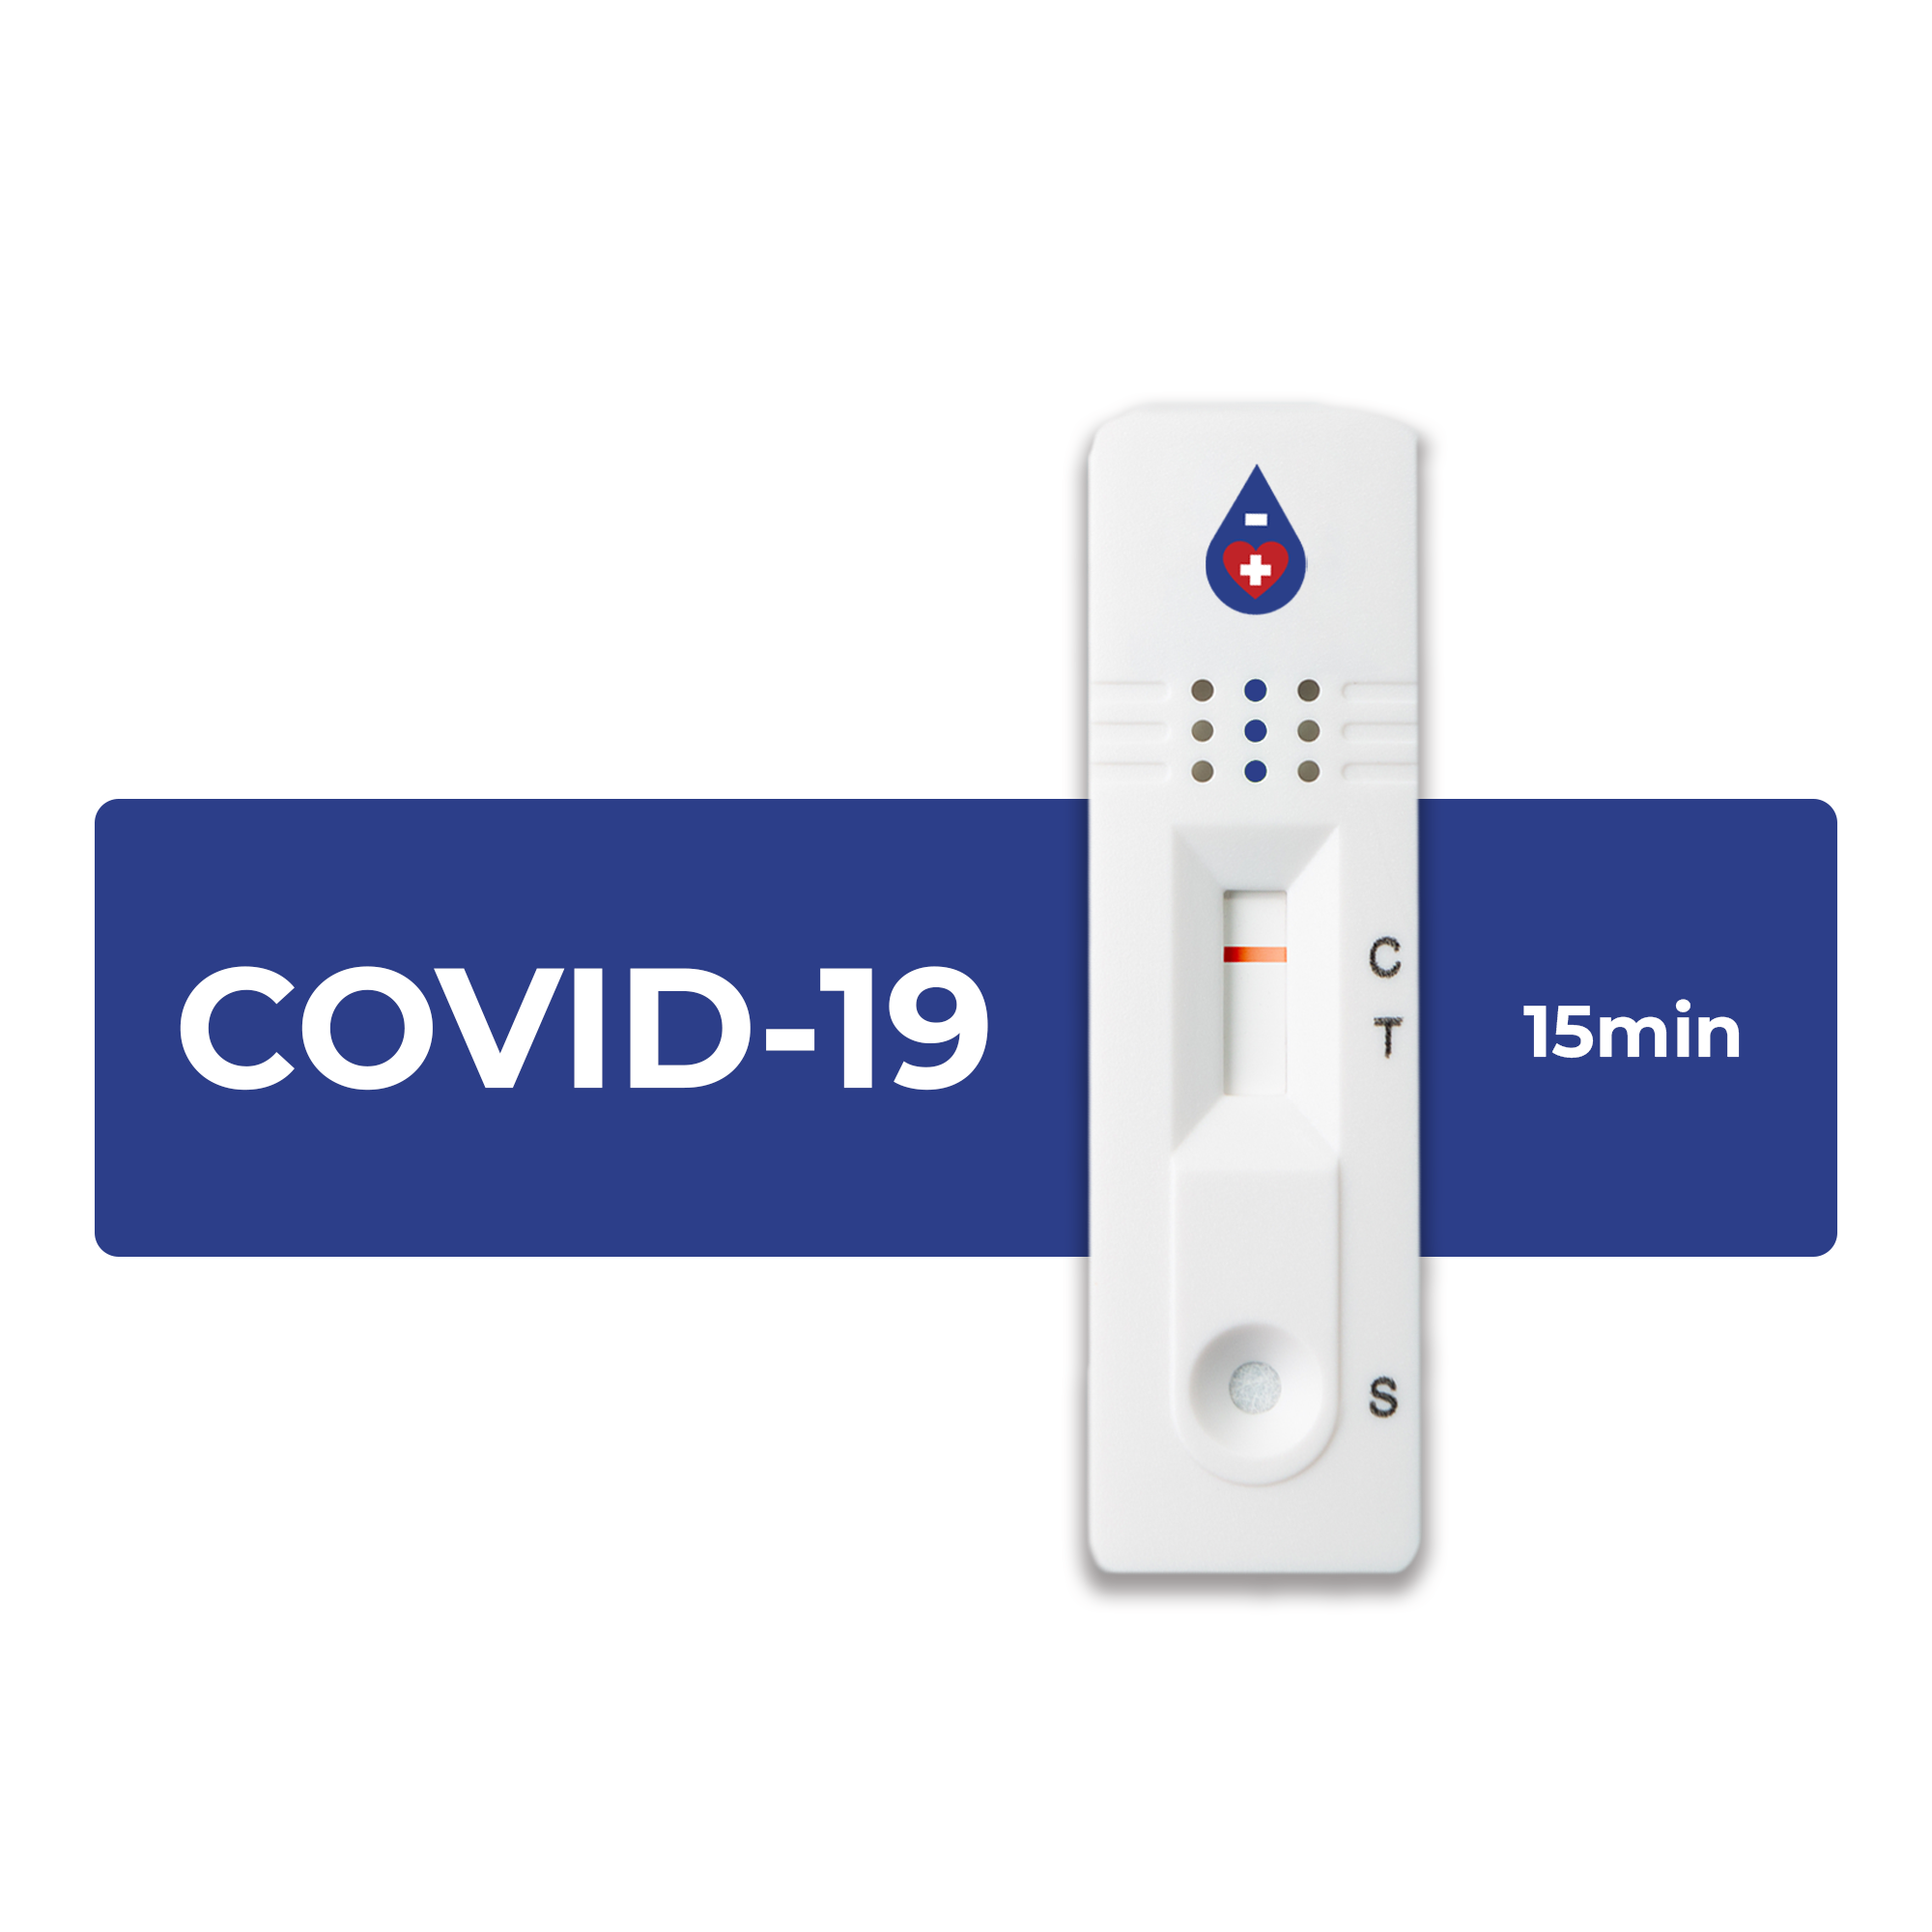 COVID-19 - RAPID TEST